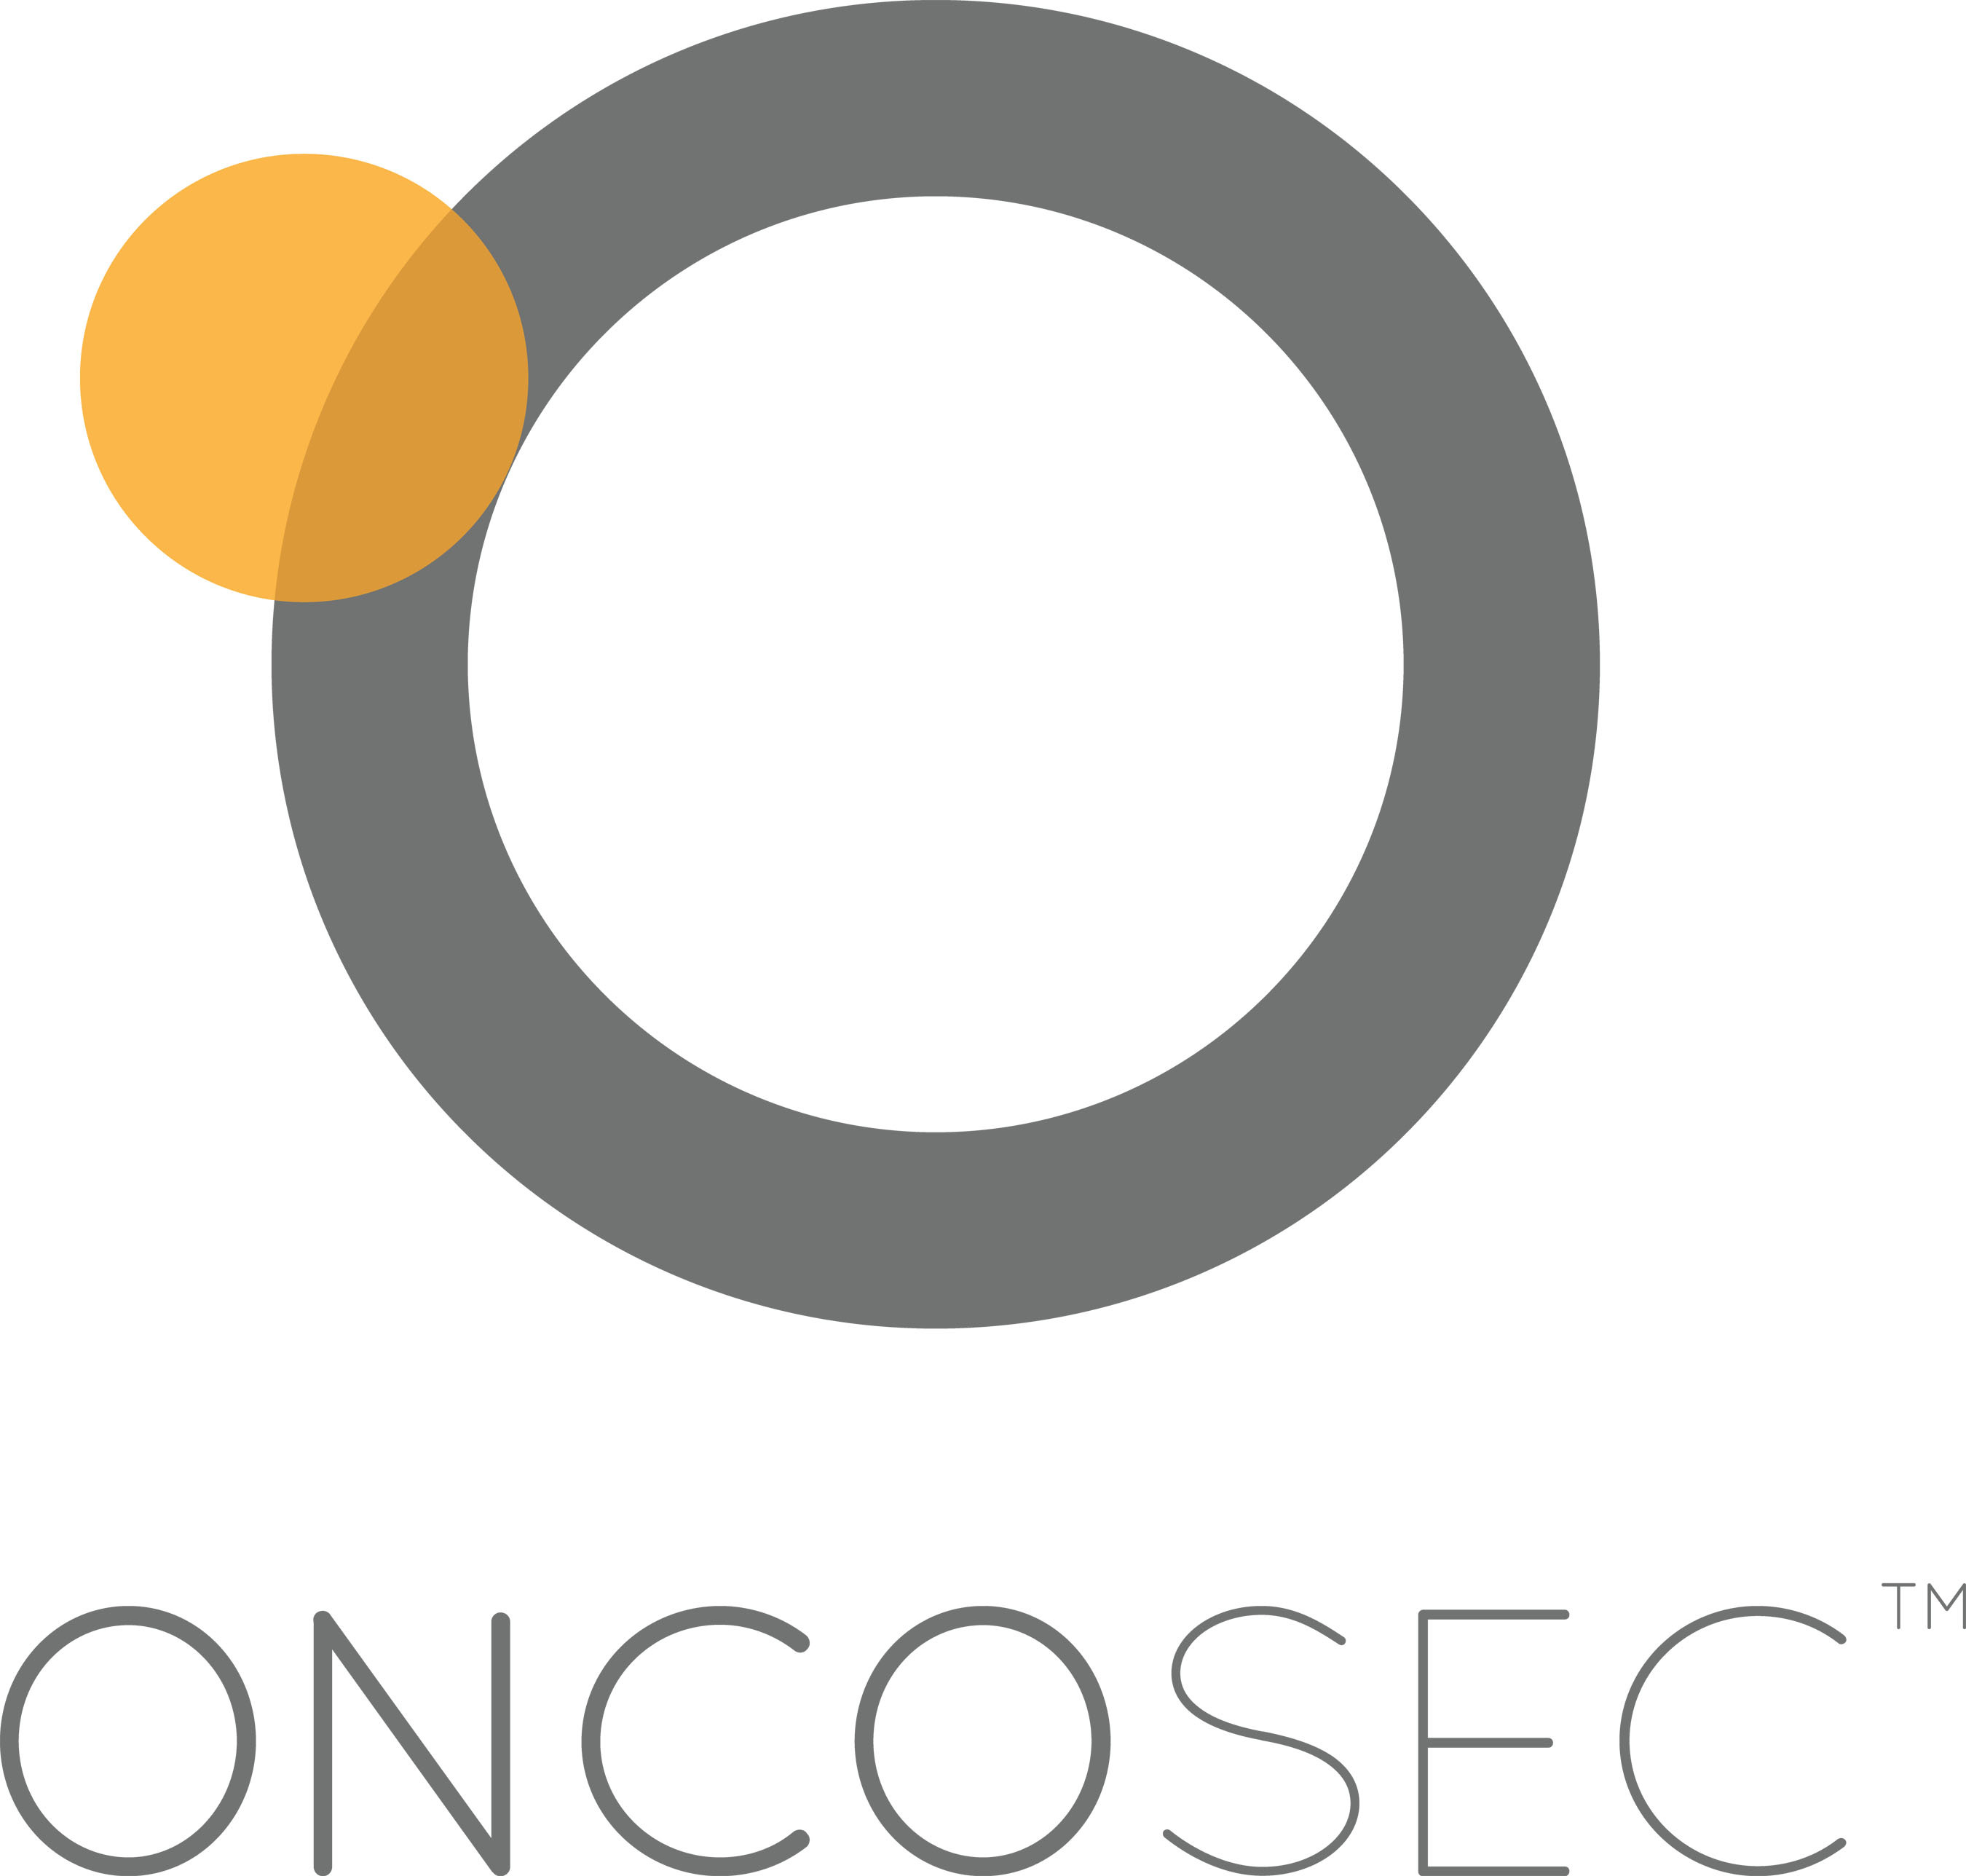 OncoSec Medical, Inc. Logo. Please visit http://oncosec.com/ for more information.